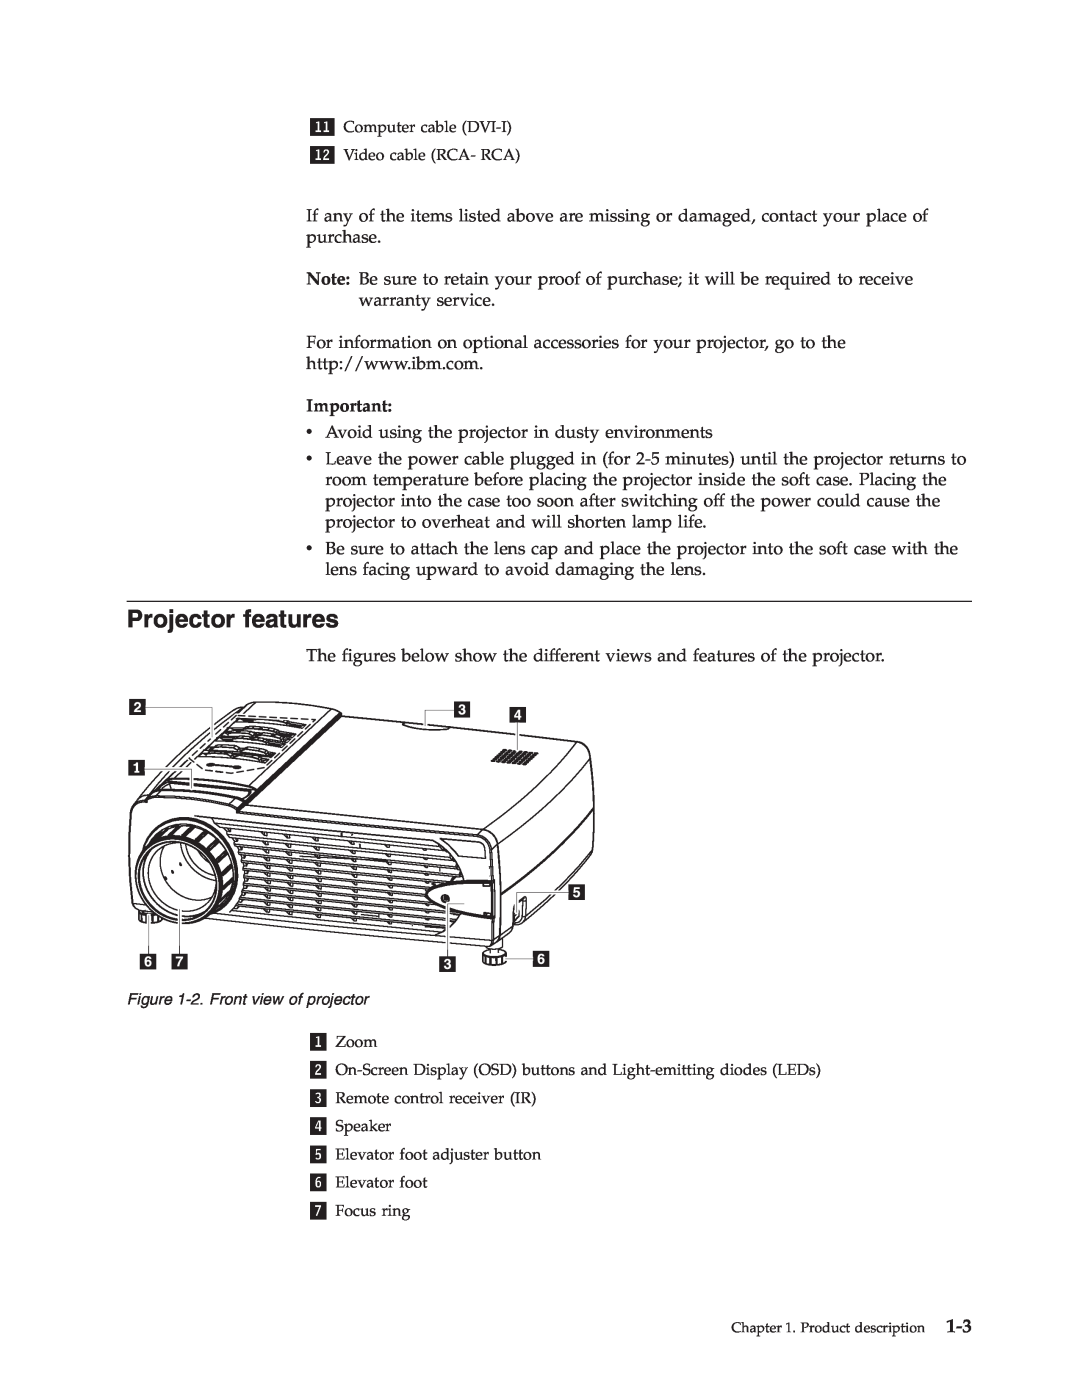 IBM PROJECTOR C400 manual Projector features 